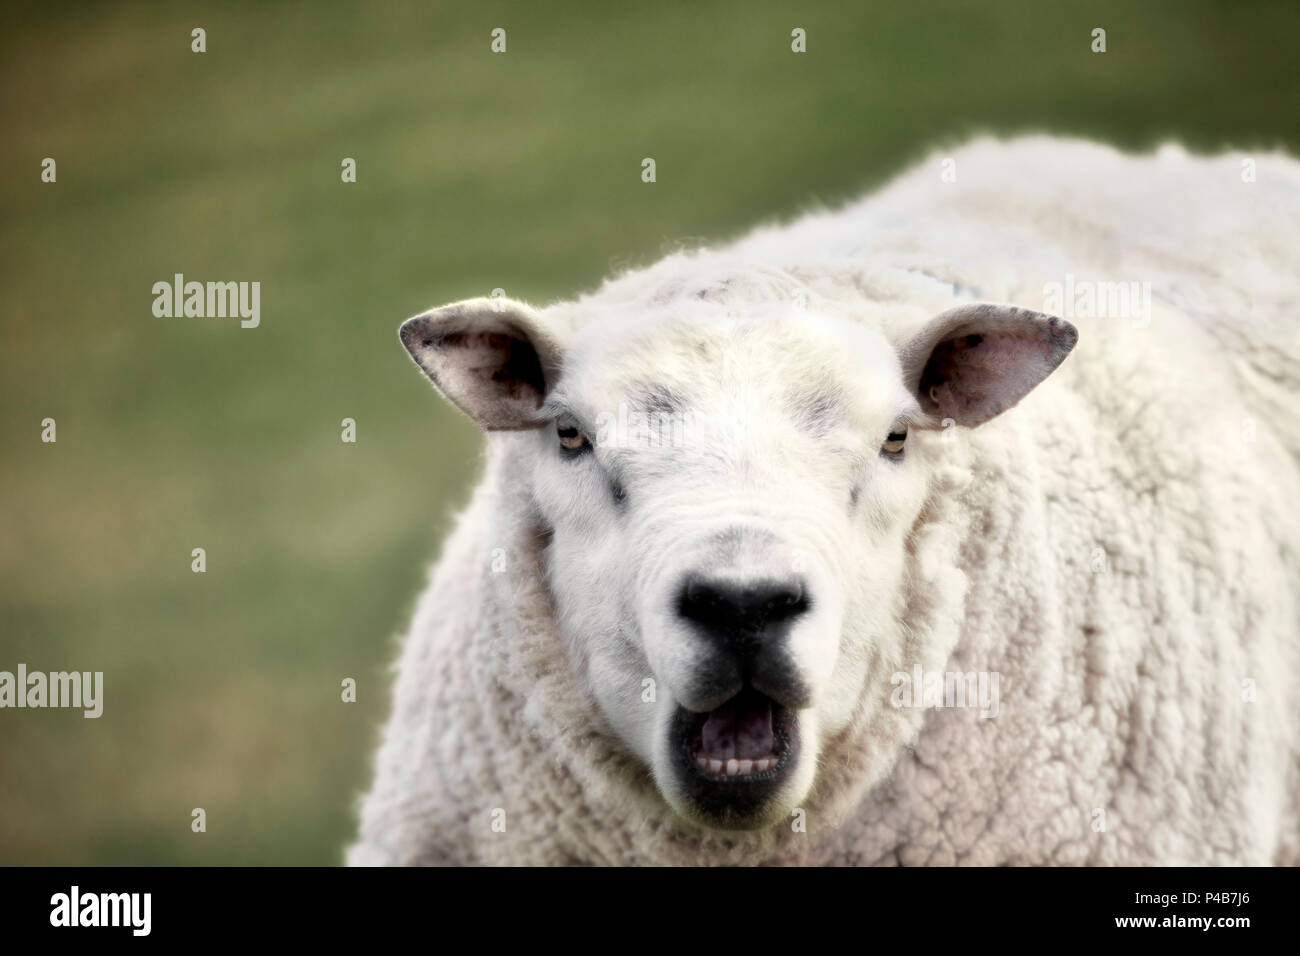 Les moutons 'Speaking' Banque D'Images